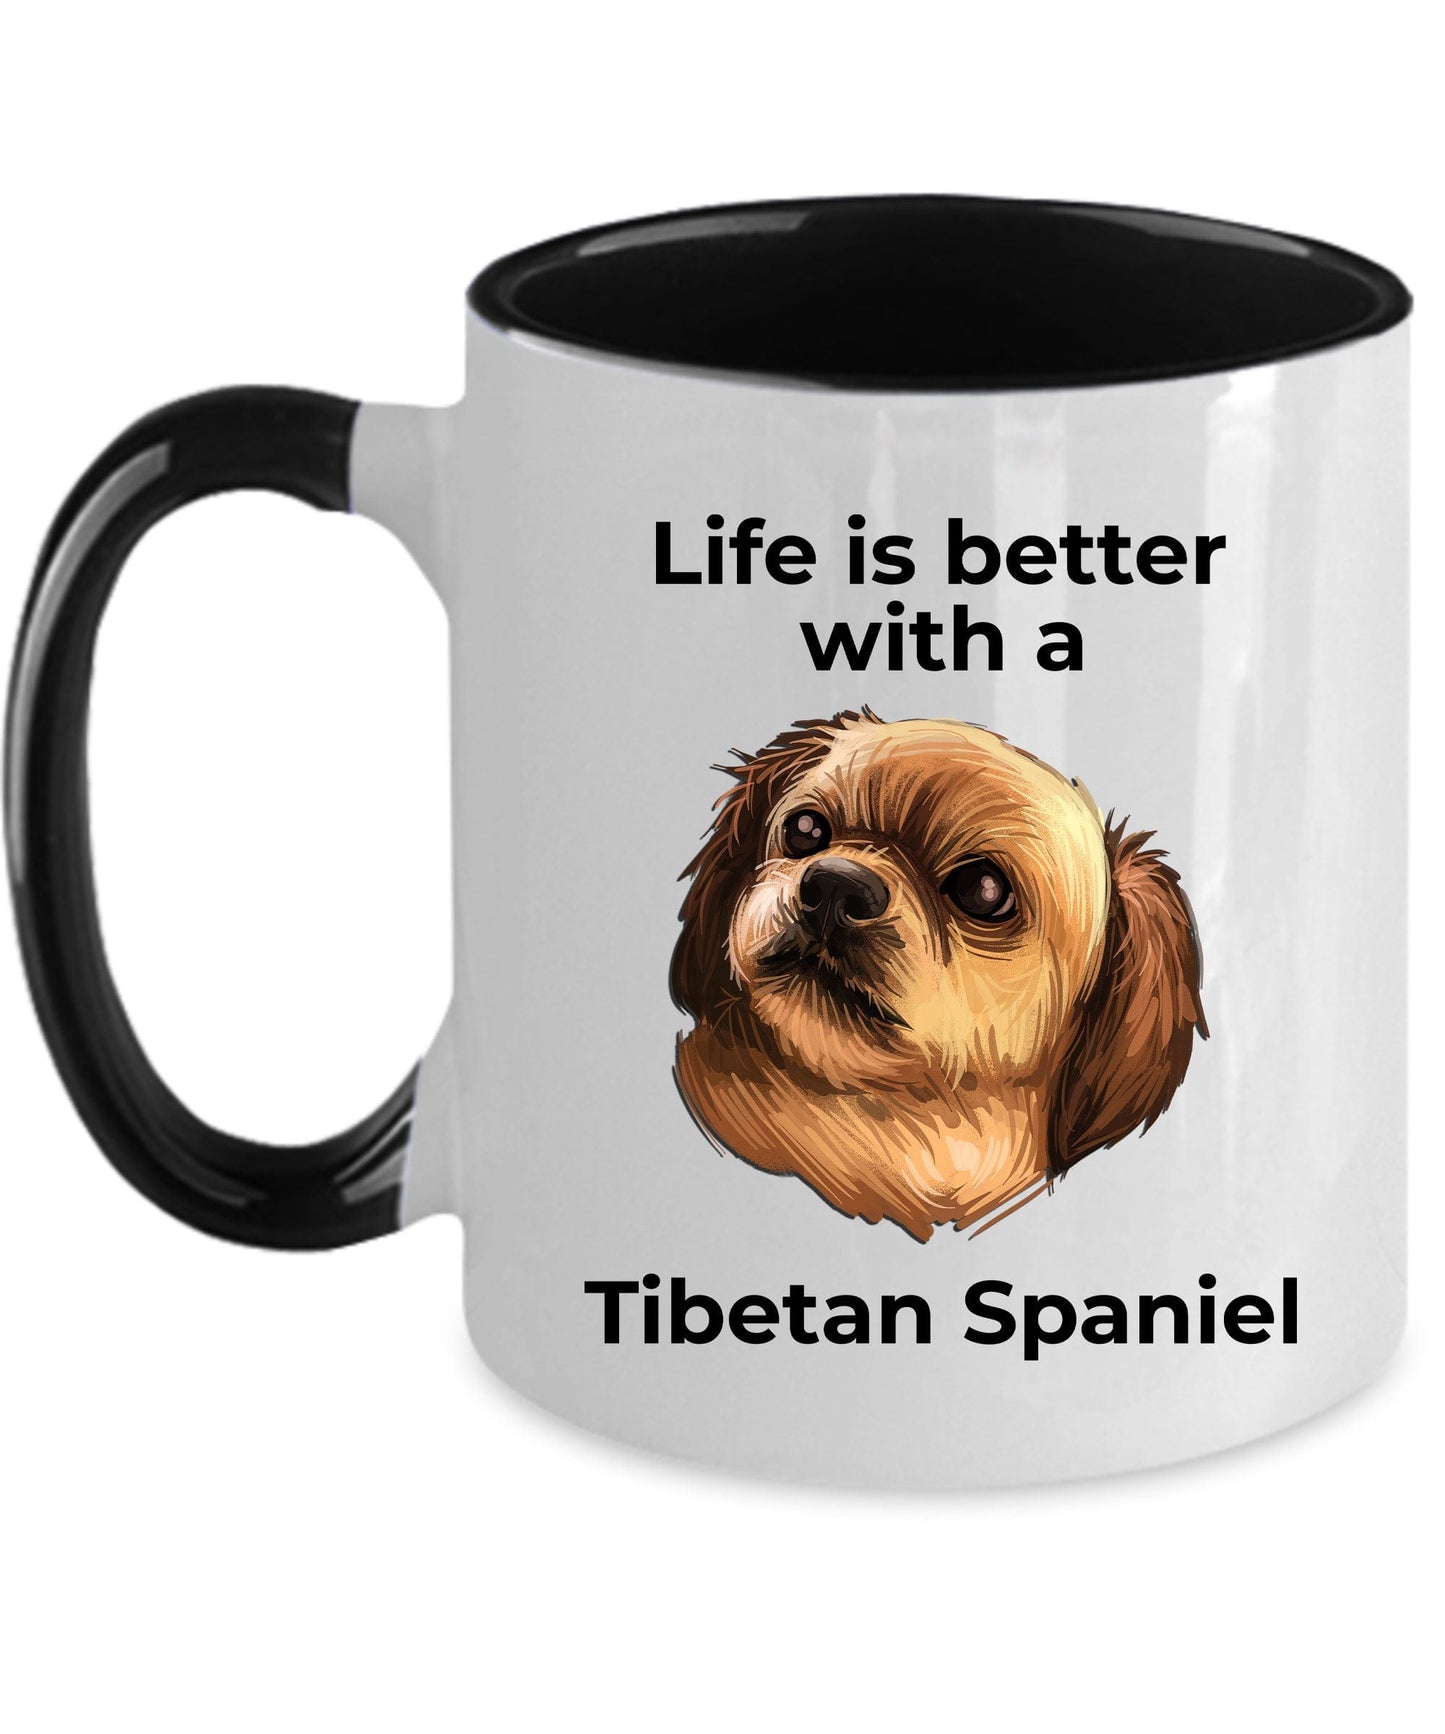 Tibetan Spaniel dog custom coffee mug - Life is Better